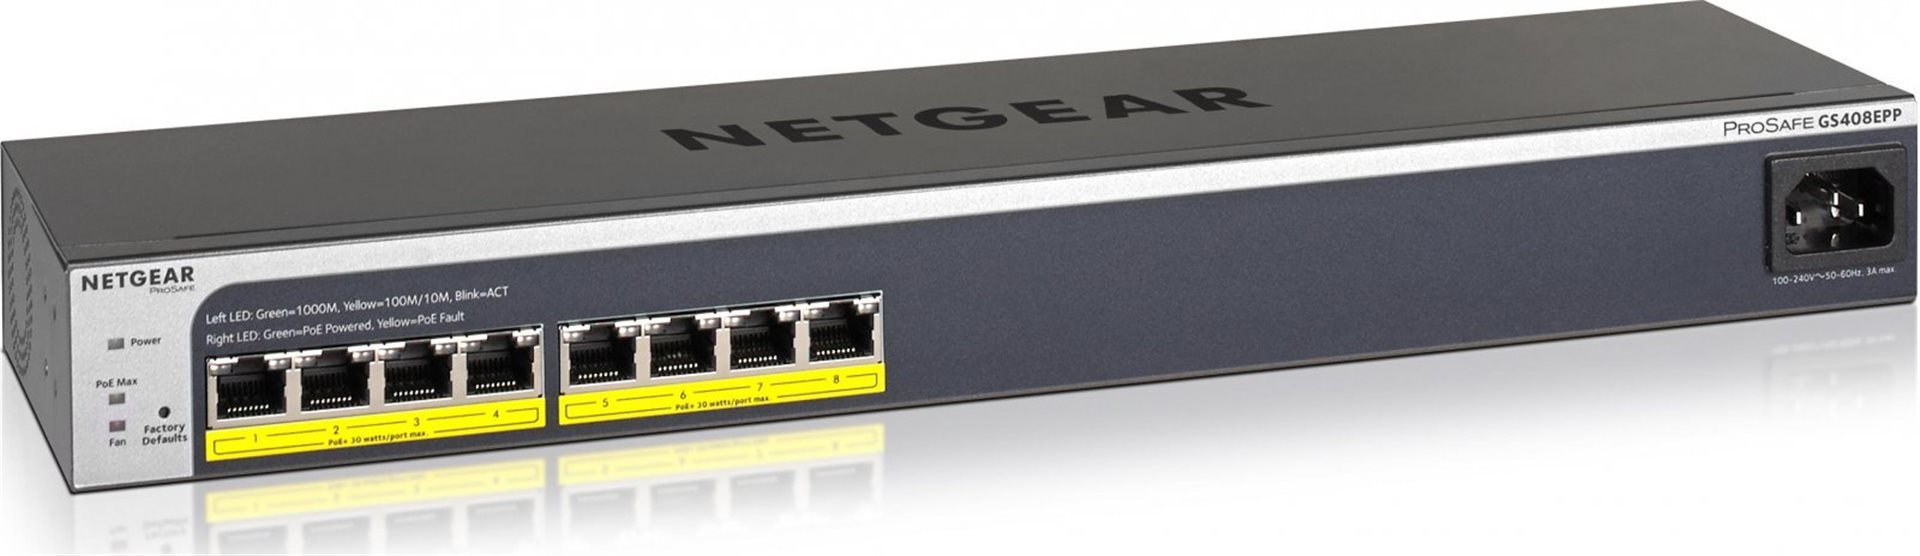 NETGEAR 8-port Gigabit Web Managed Easy-Mount Switch w/8-port PoE/PoE+, GS408EPP